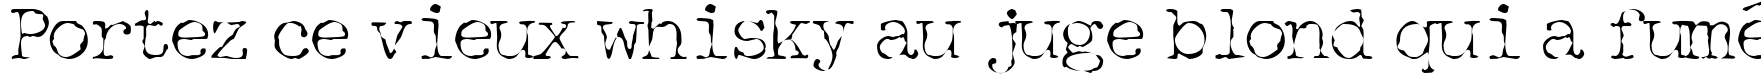 Пример написания шрифтом Detective текста на французском